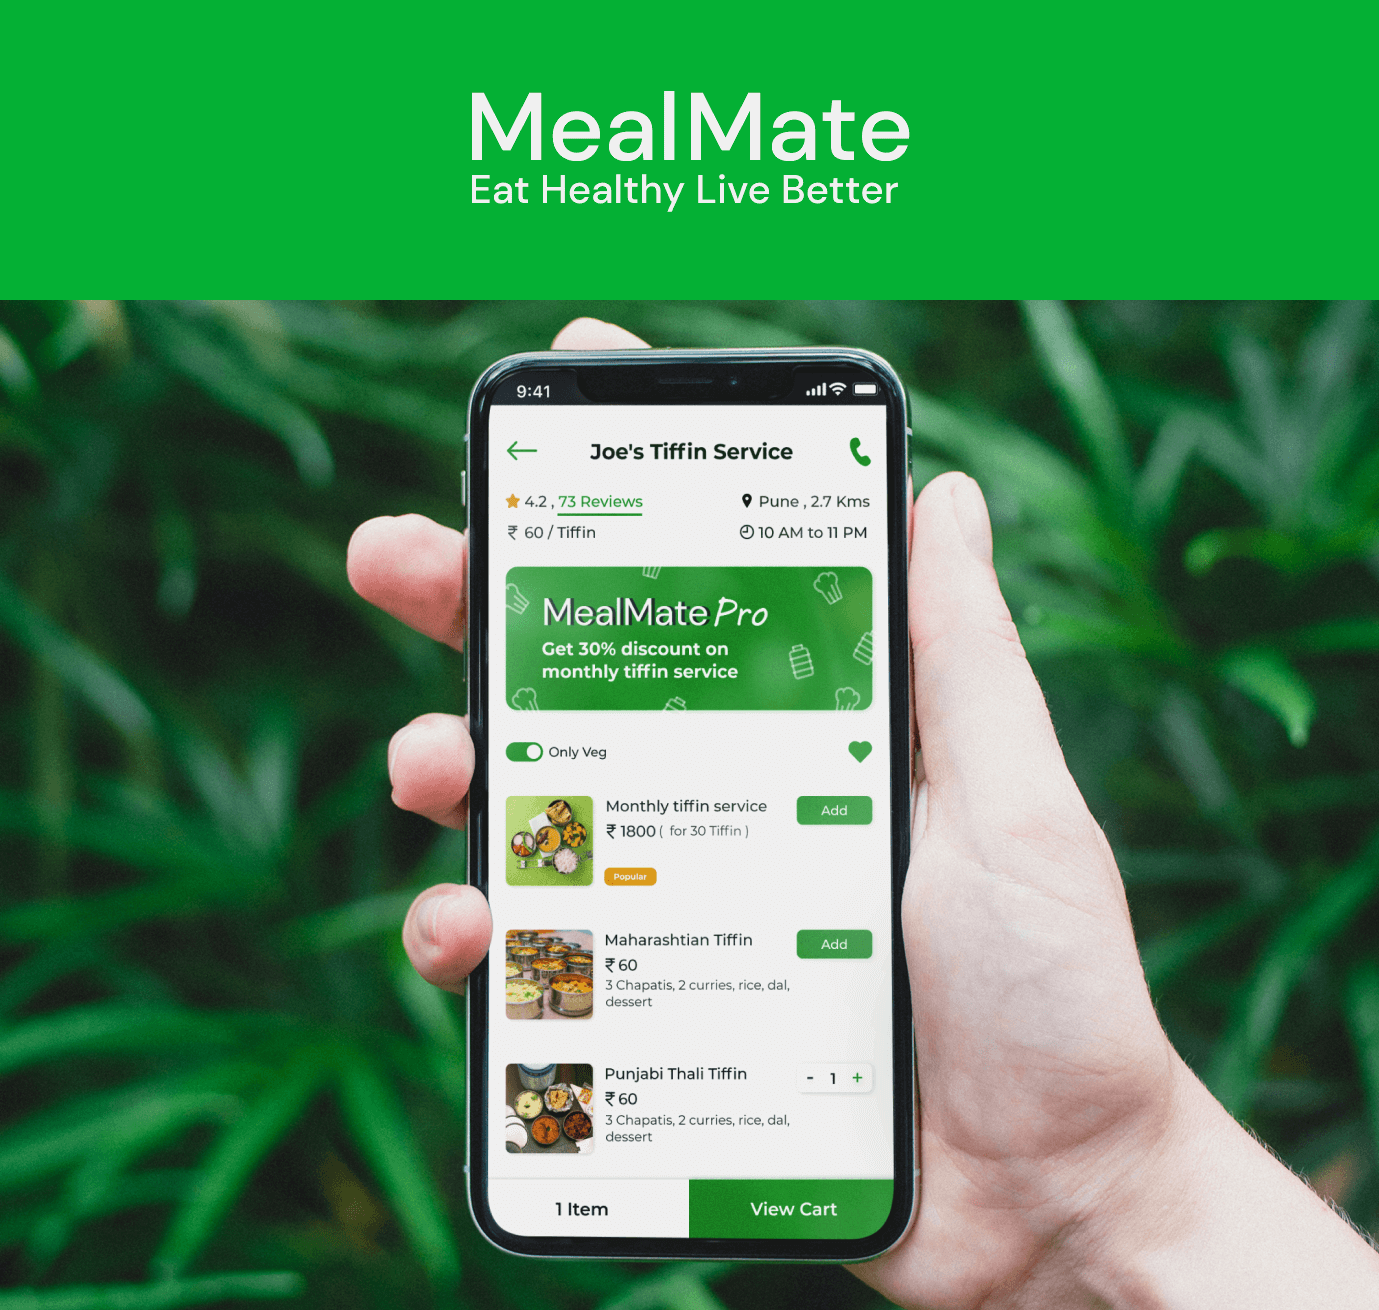 mealmate app on a smartphone